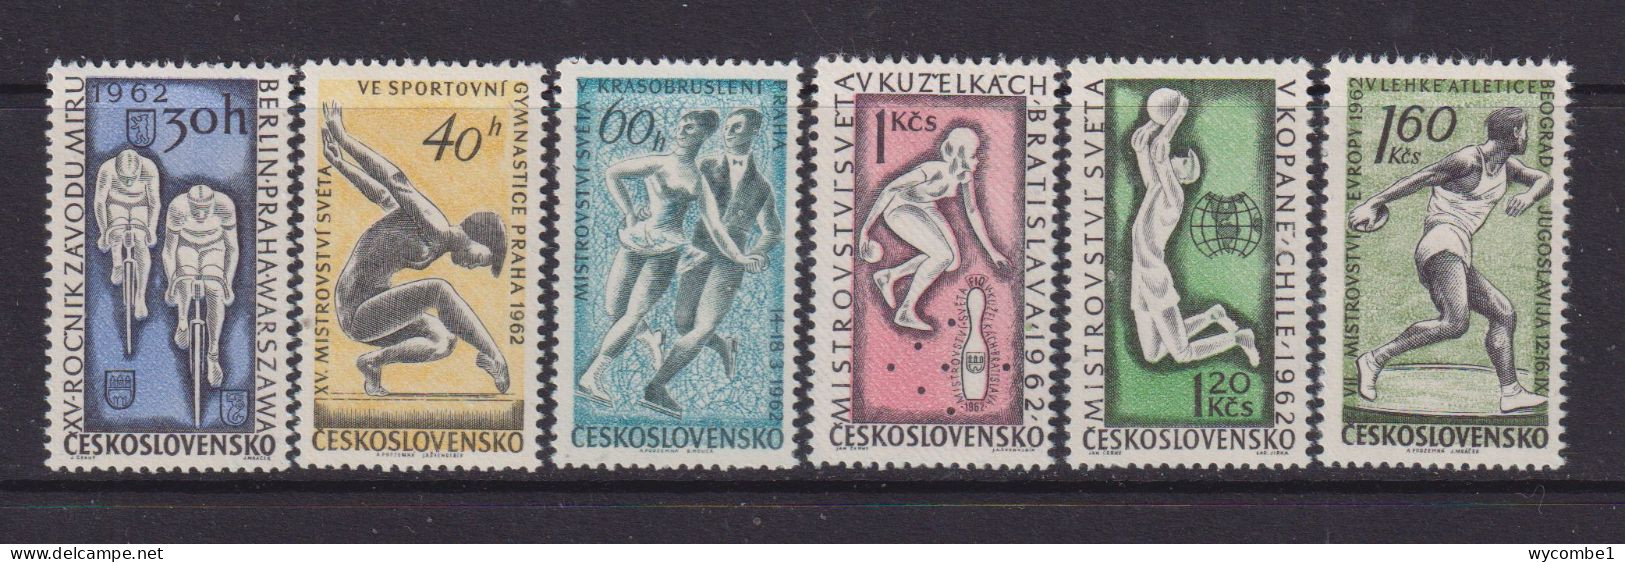 CZECHOSLOVAKIA  - 1962 Sports Events Set Never Hinged Mint - Ungebraucht